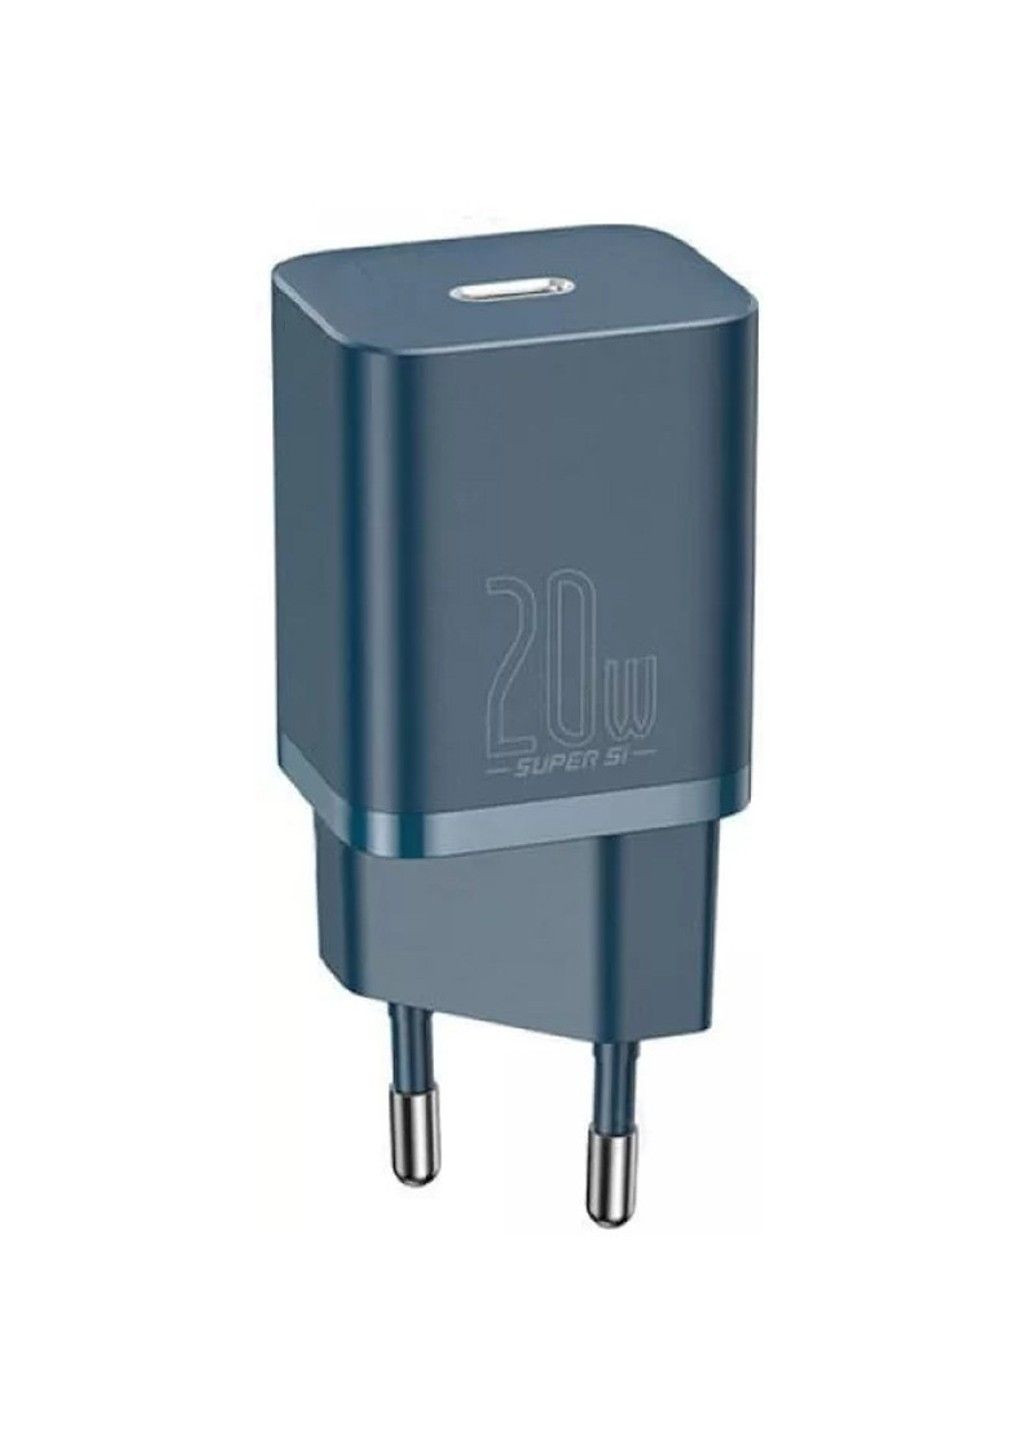 СЗУ Super Si Quick Charger 1C 20W + кабель Type-C to Lightning (TZCCSUP-B) Baseus (291879086)